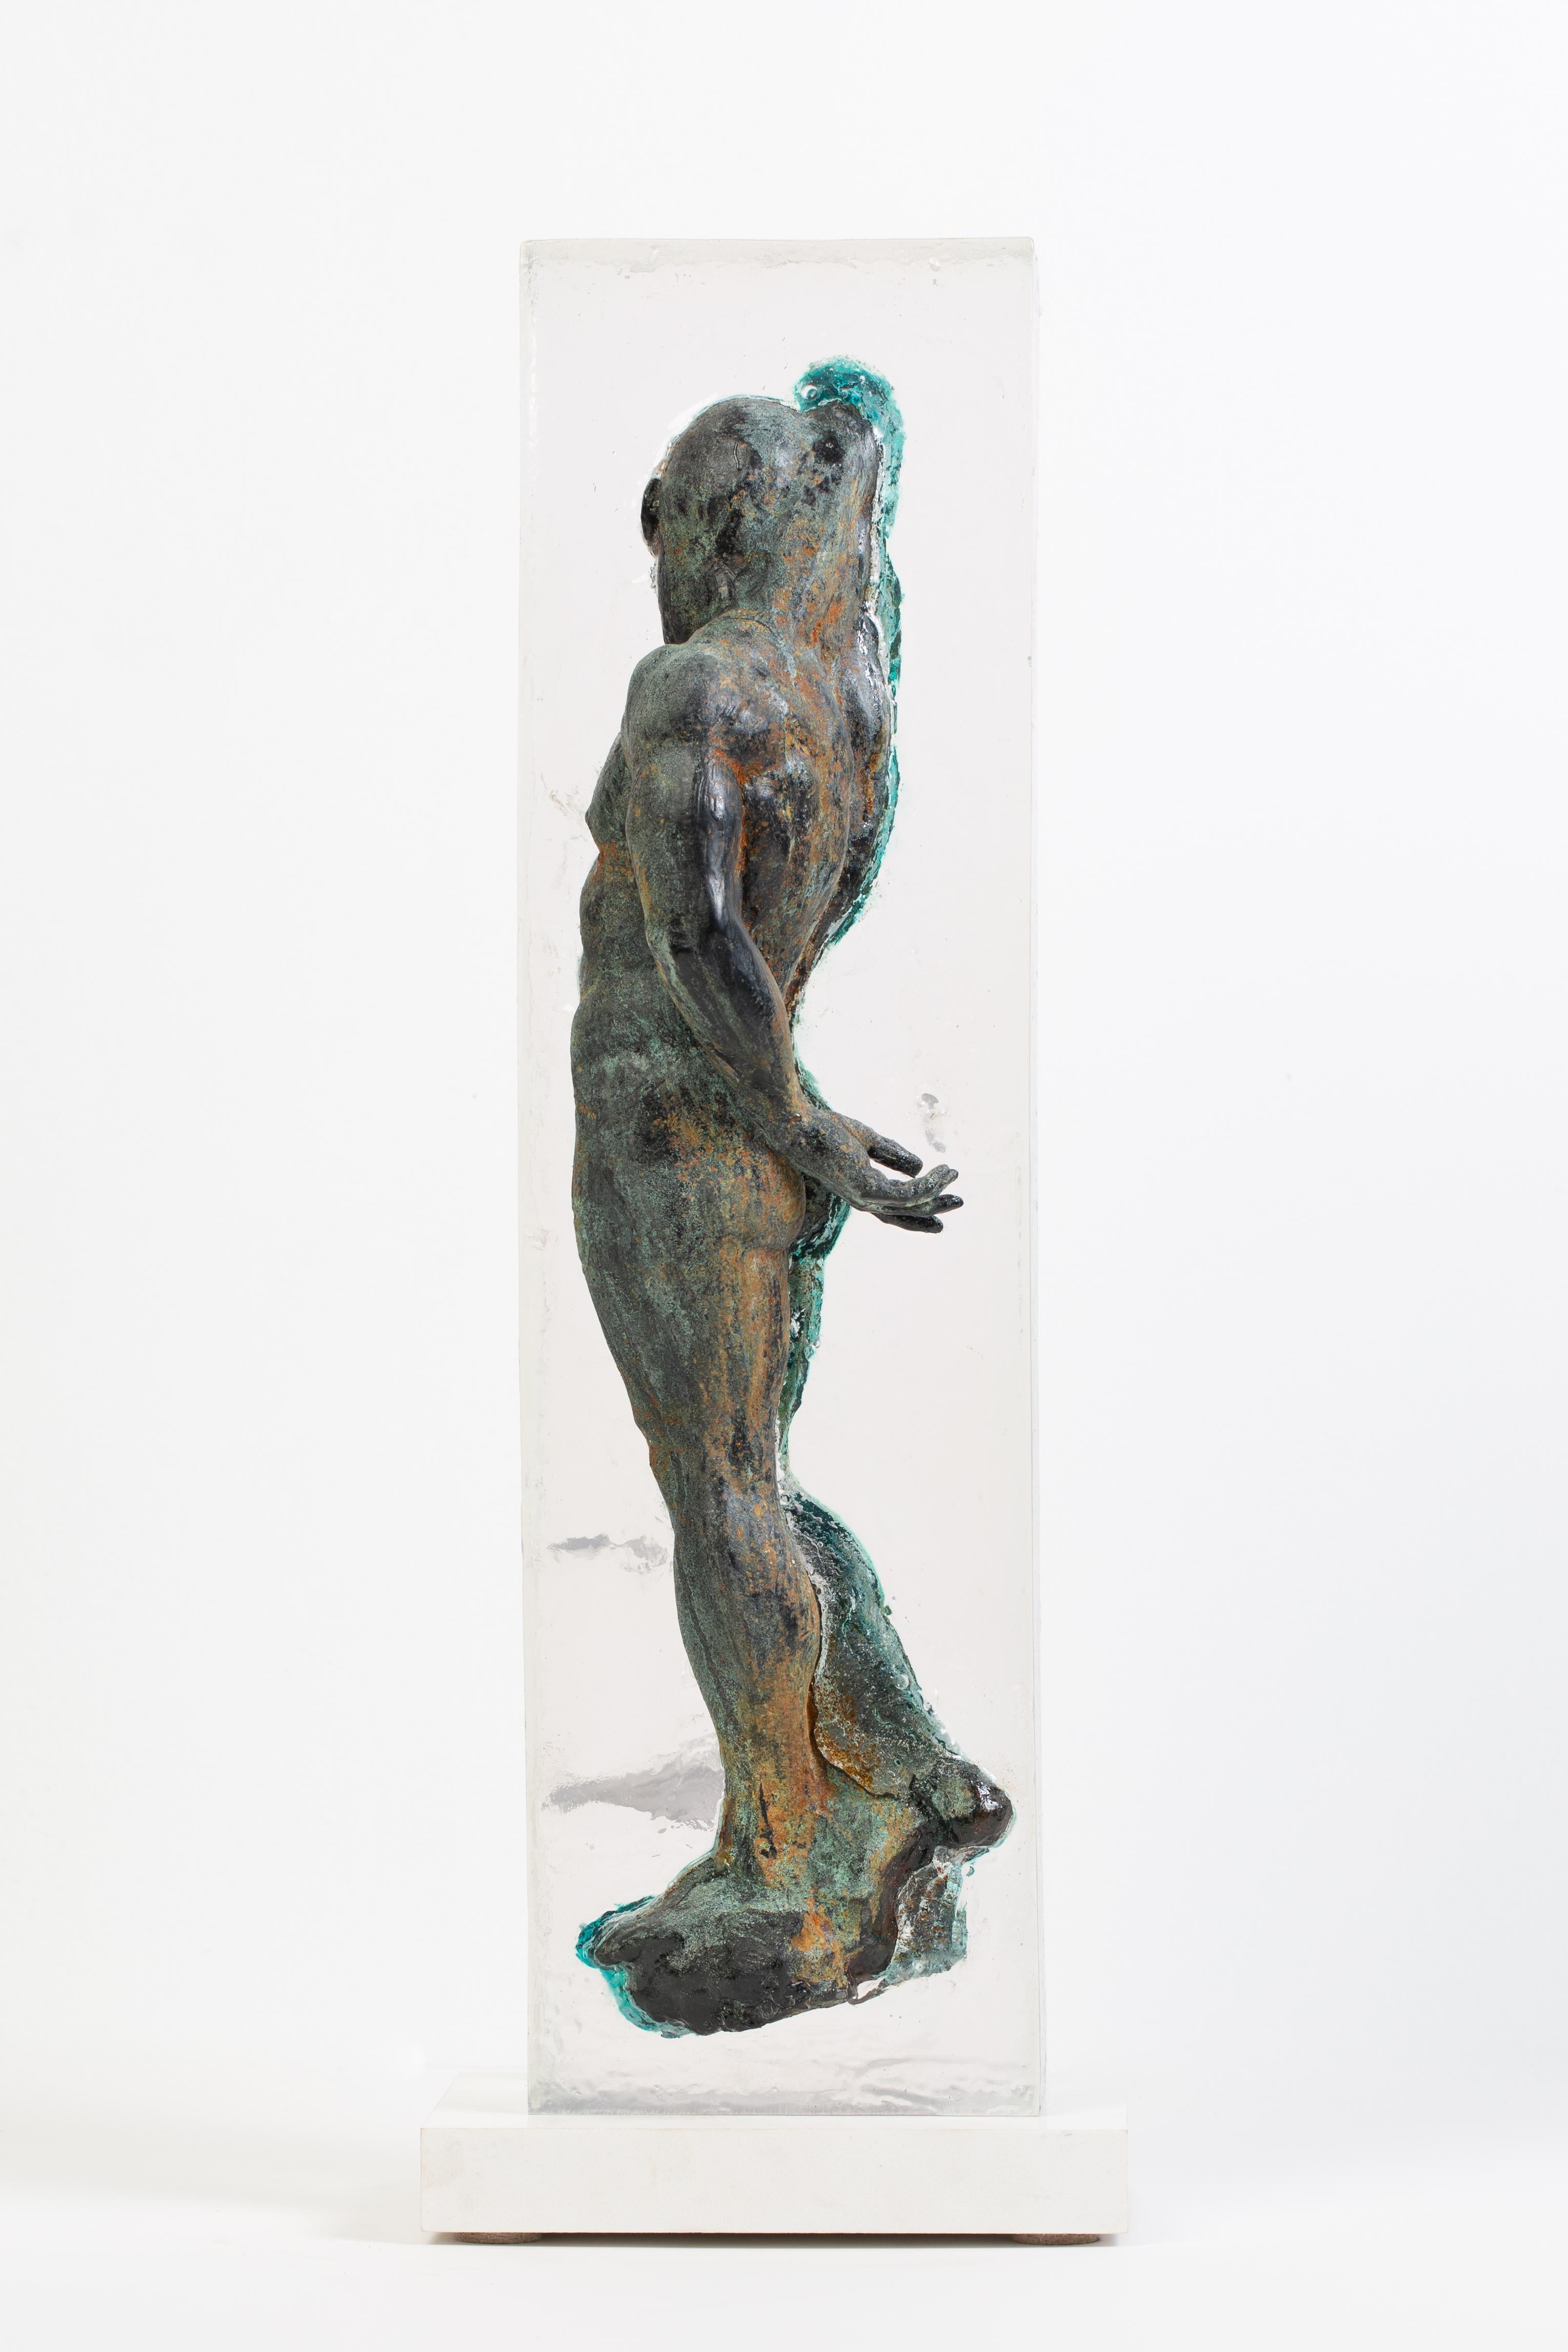 Embedded Slave - After Michelangelo, Sculpture Half Embedded in Clear Resin 14